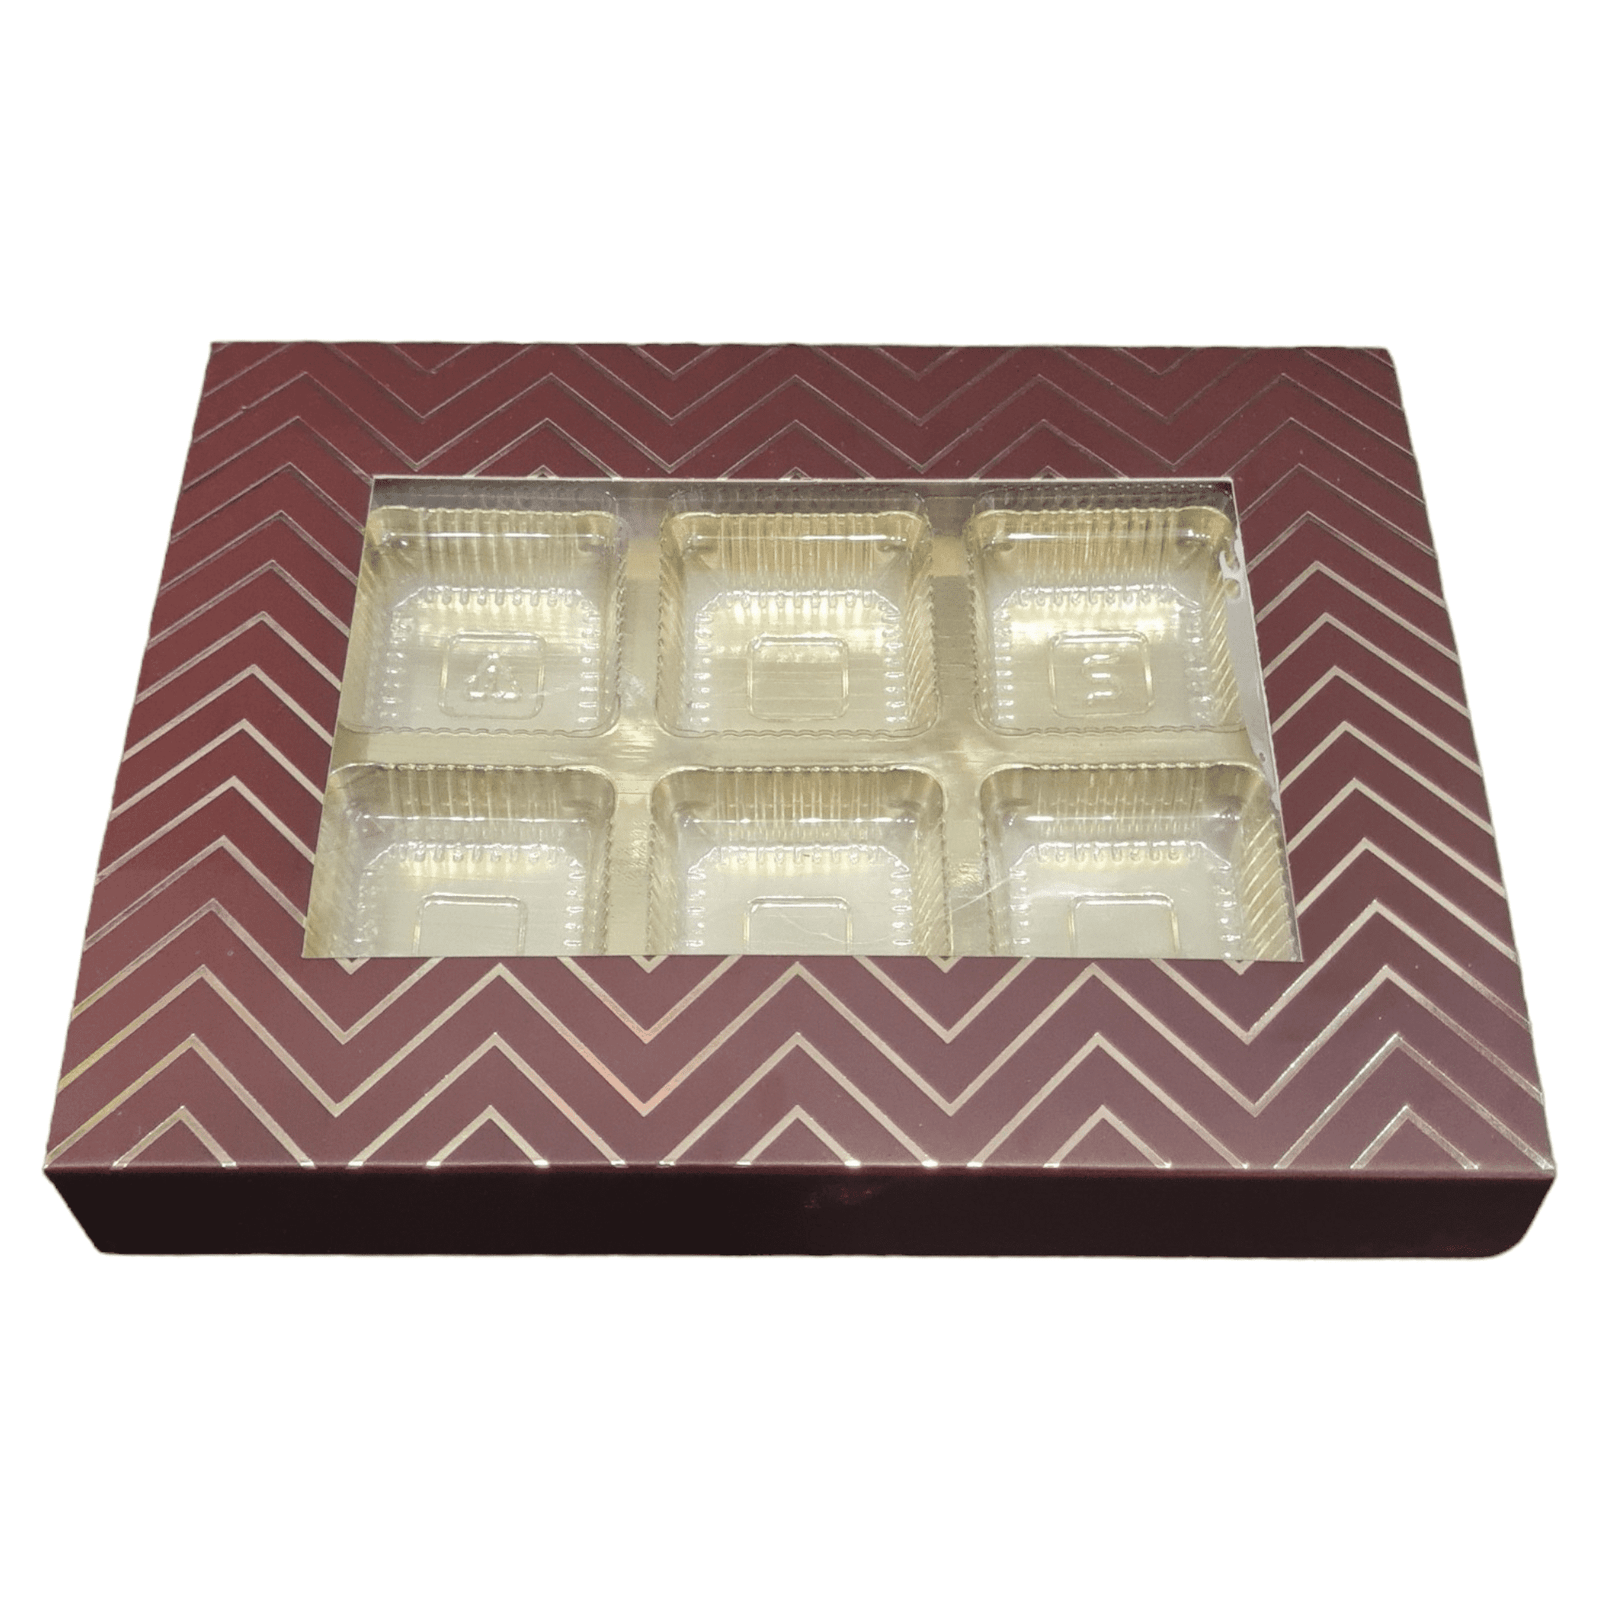 Modern Bespoke Corporate Gift Boxes - Foxblossom Co.